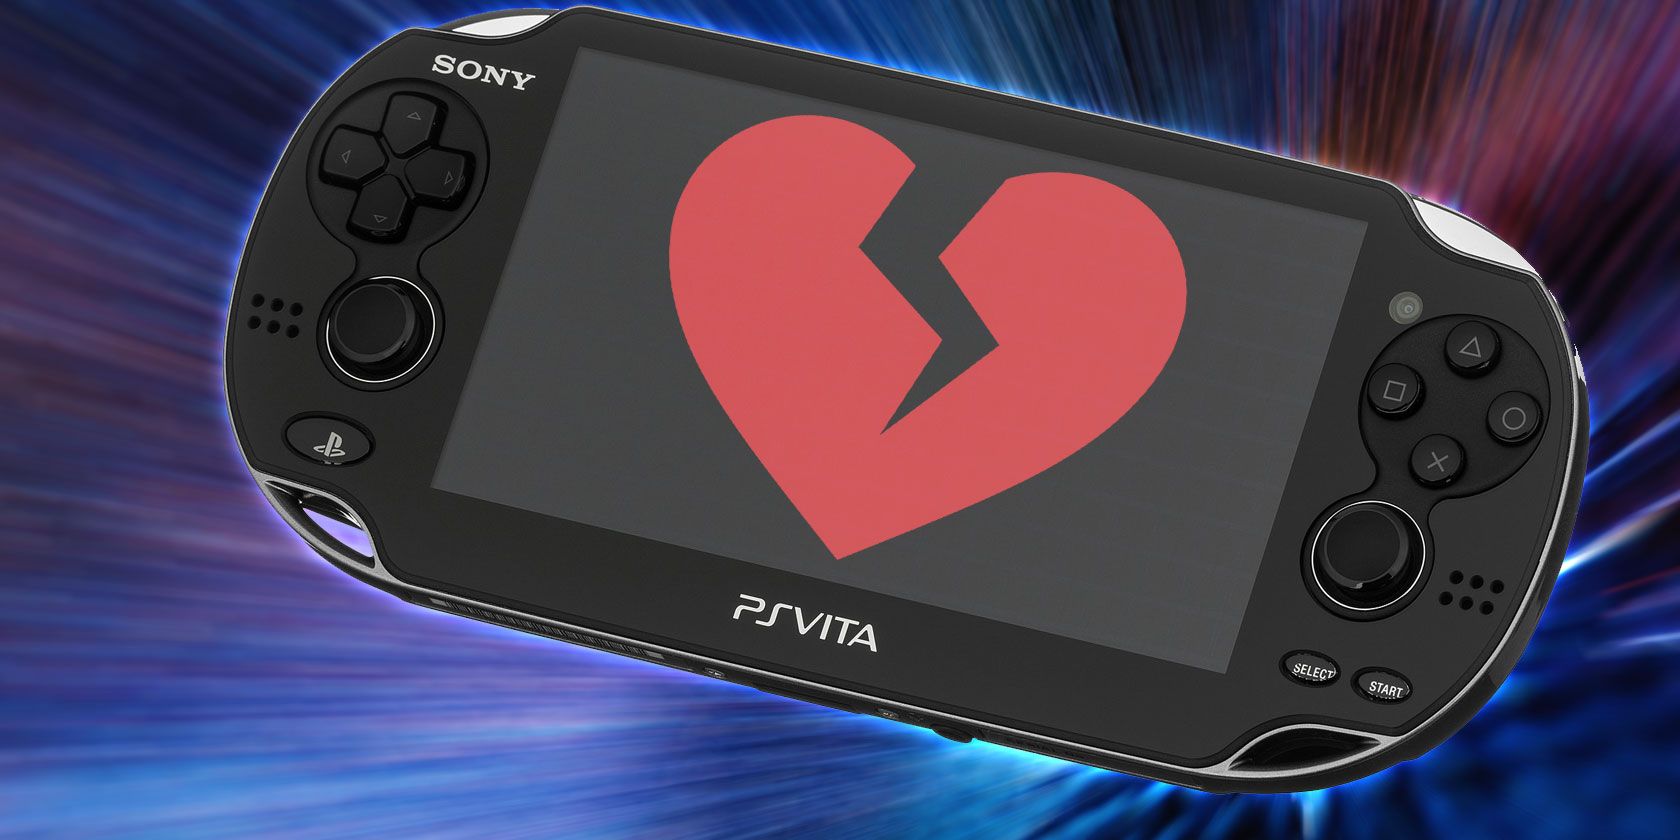 9 Reasons Why the PS Vita Failed